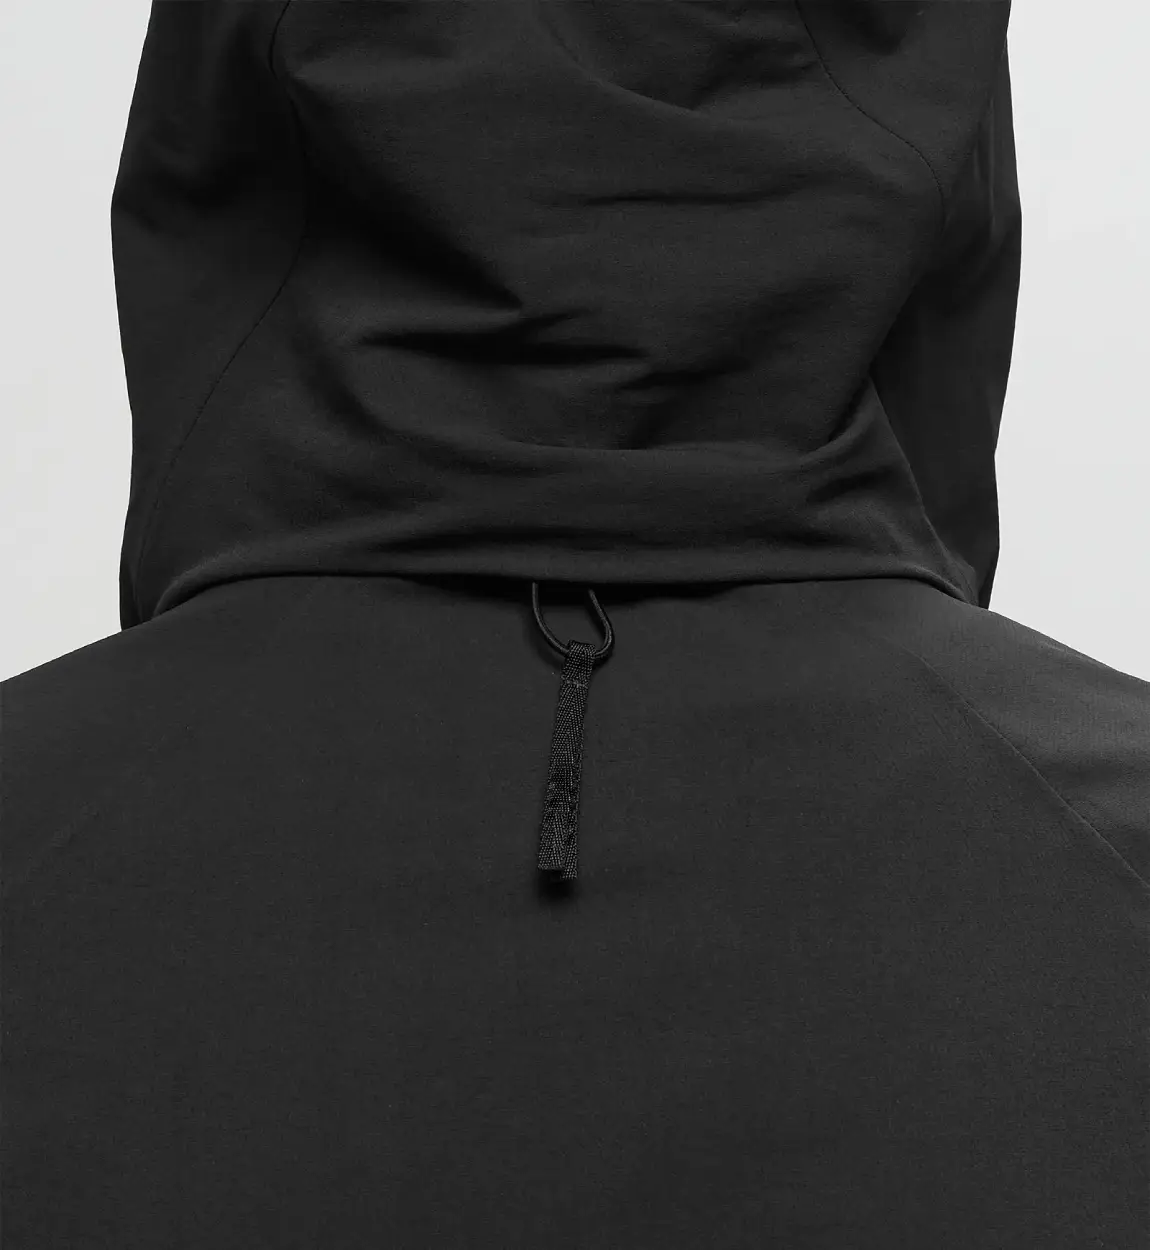 Tendon Windbreaker Black Custom Made Jacket